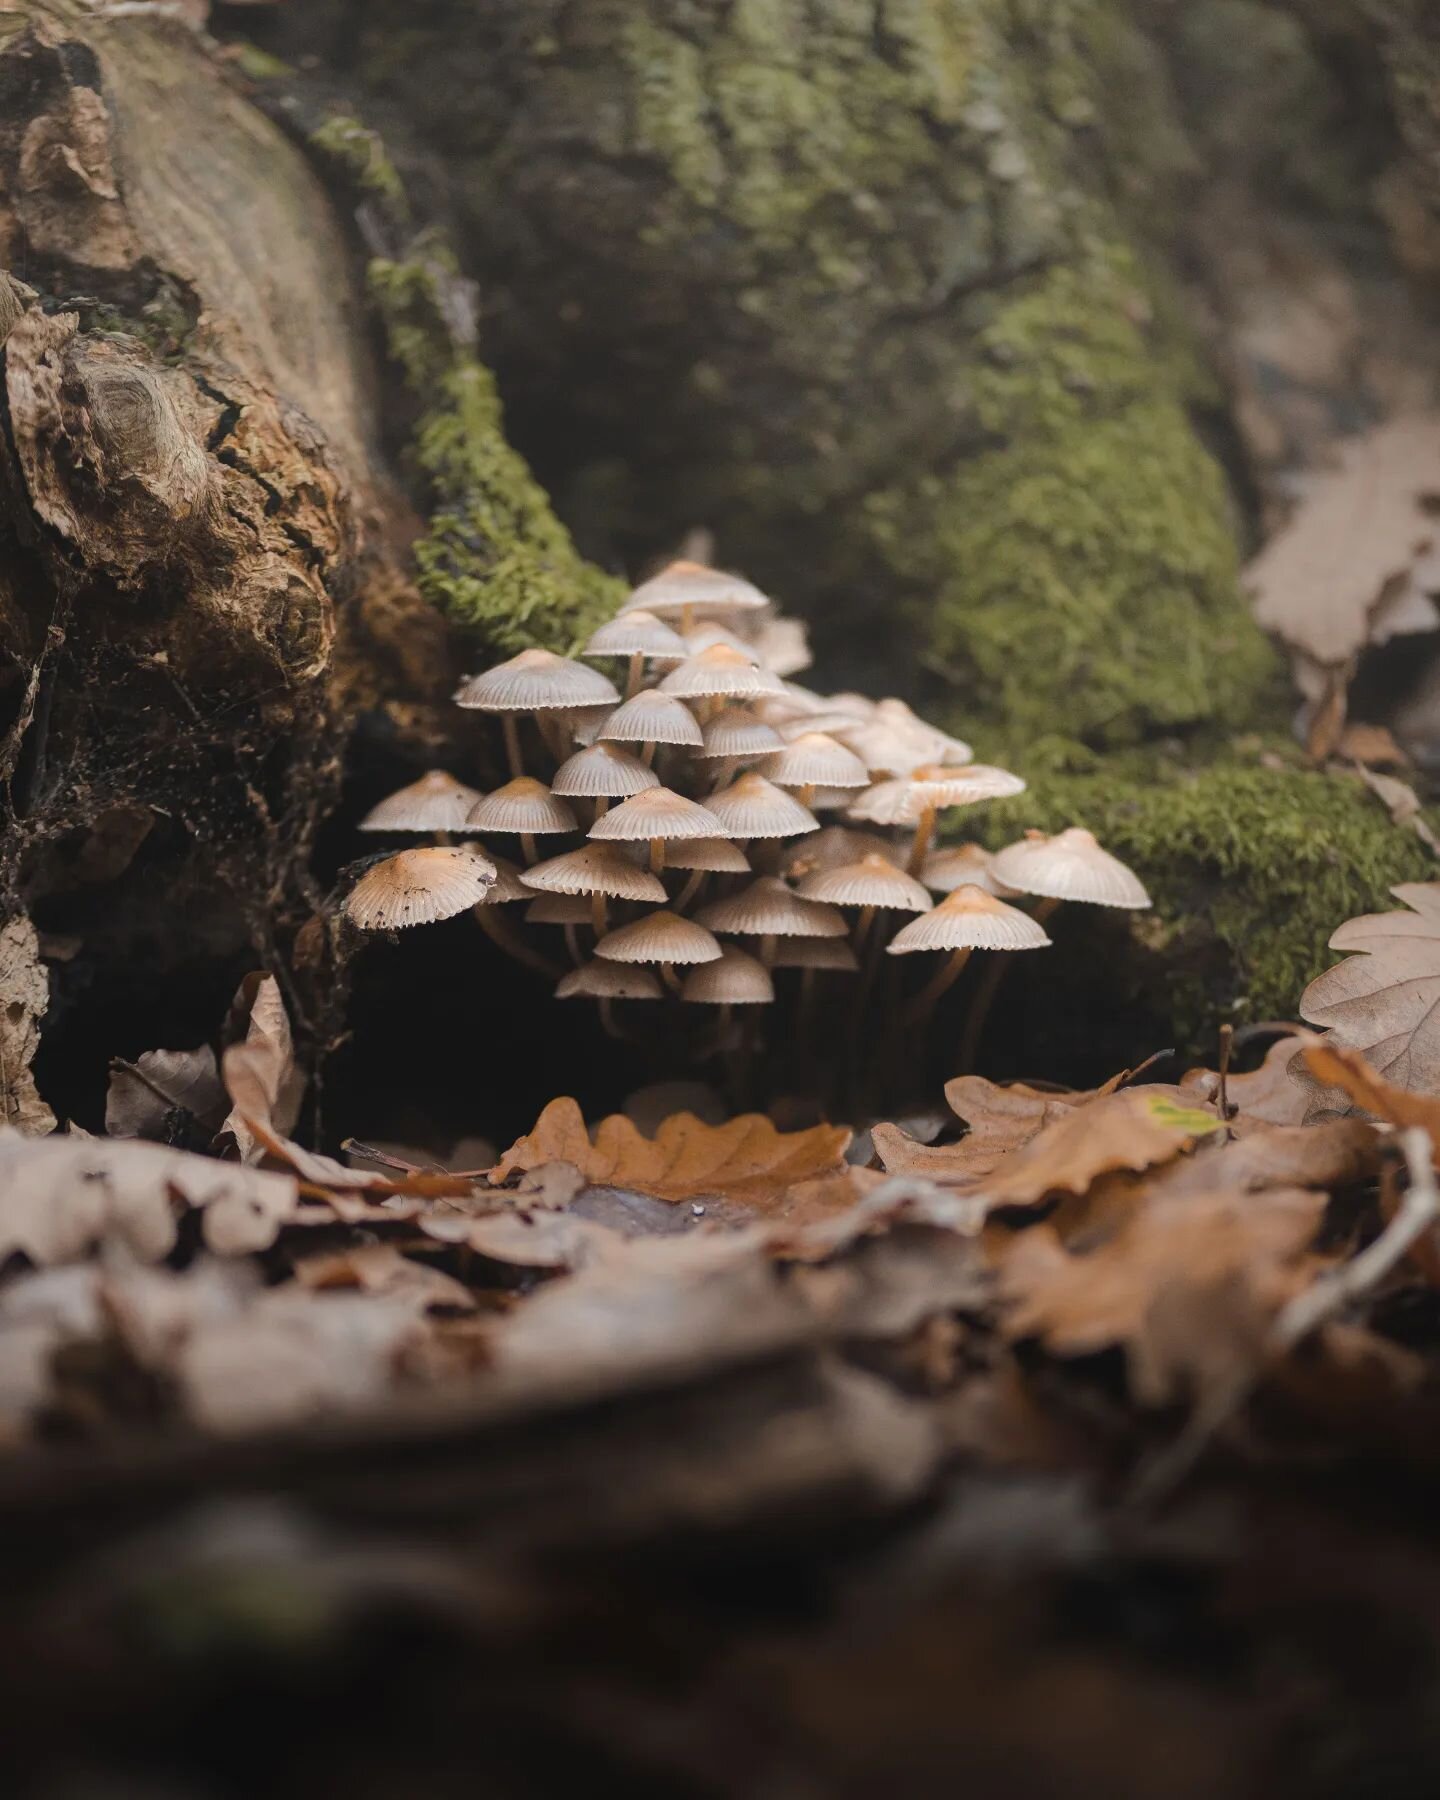 Microcosm 

@sonyalpha A7iii // Sony 85mm f1.8

#autumn2022 #mushroom #fungifanatic #wildernessculture #wildlifeonearth #woodlandwalk #woodlandphotography #forestlovers #moodyforest #forestfloor #mushroompicking #photoreel #moods_in_frame #moodeditz 